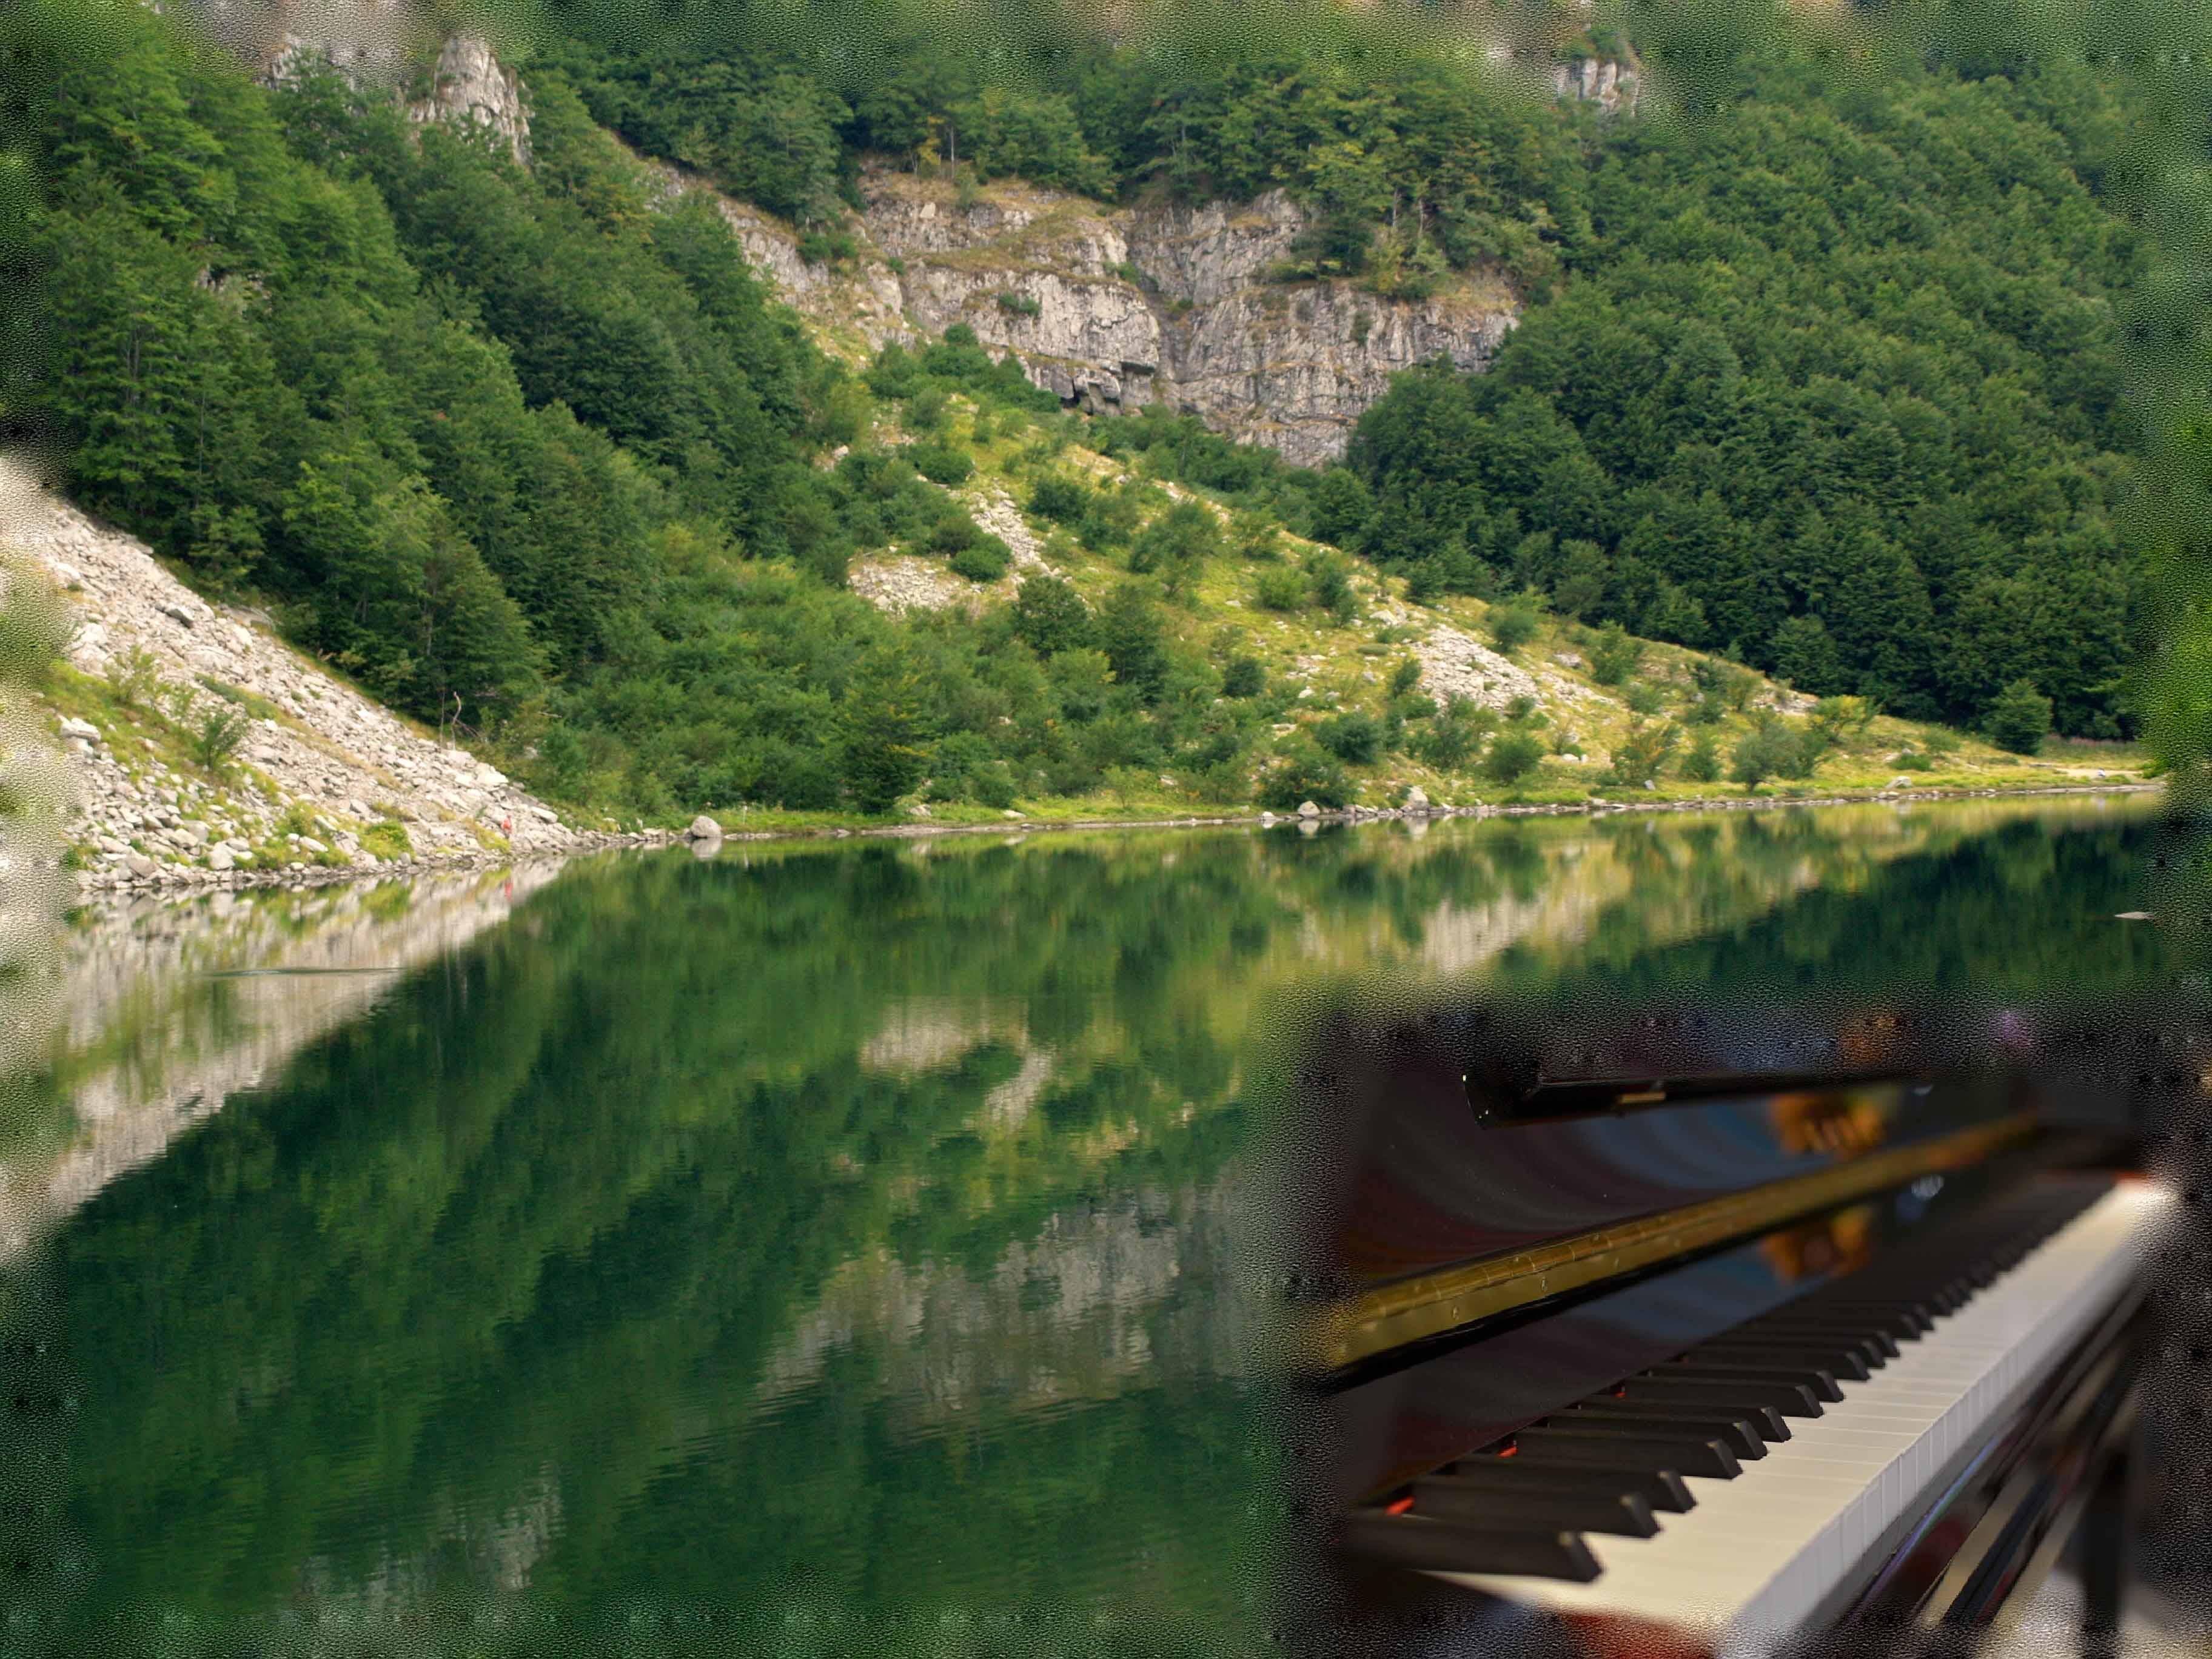 La leggenda del pianista sul lago